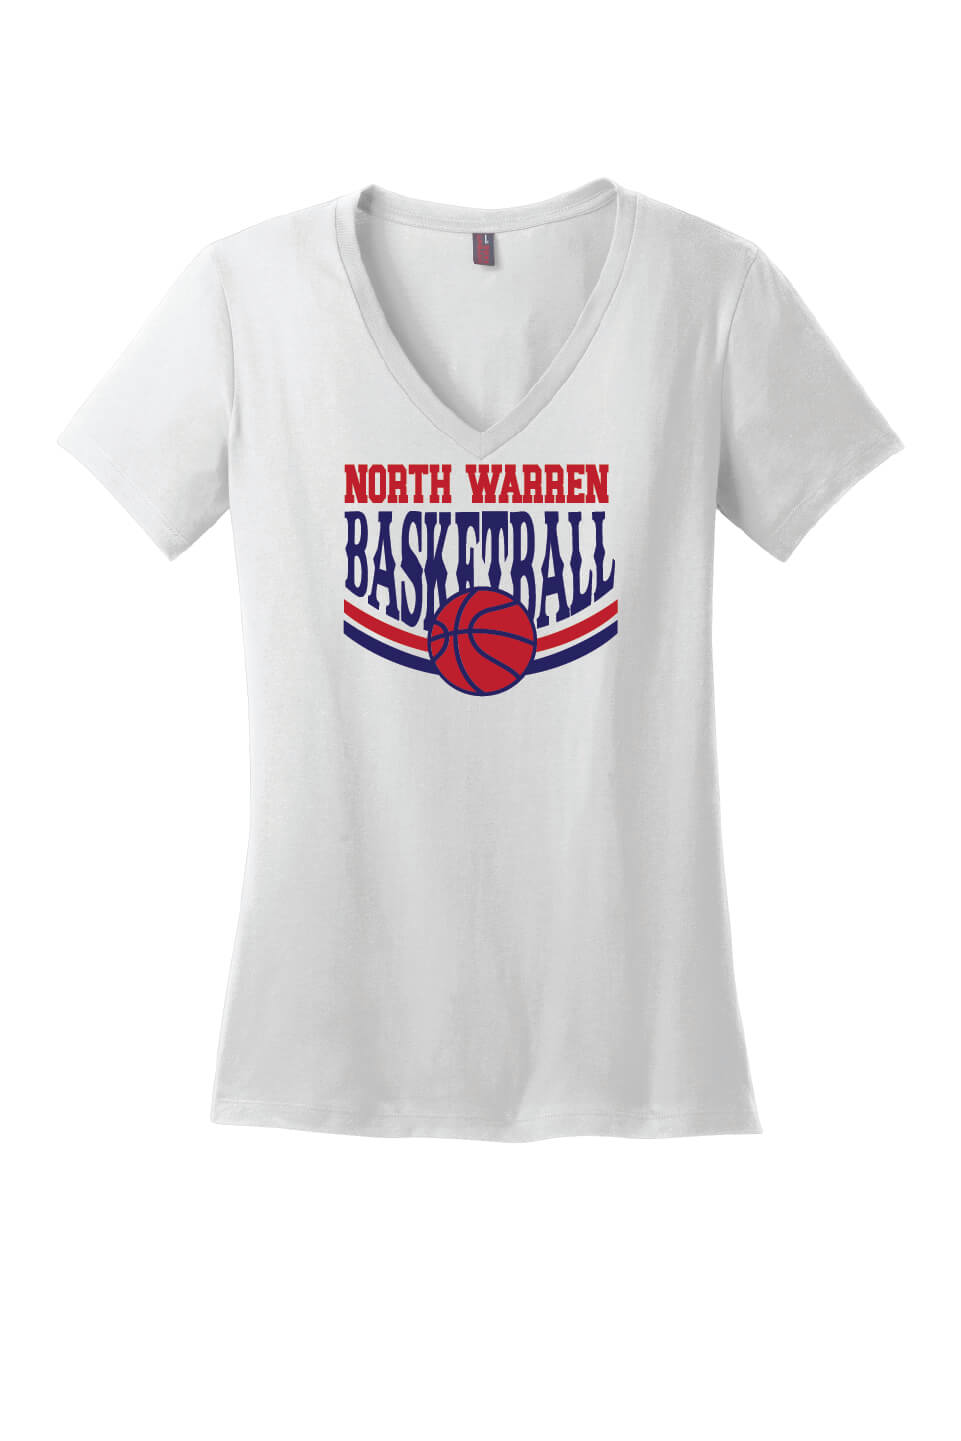 NW Basketball V-Neck Short Sleeve T-Shirt (Ladies) white